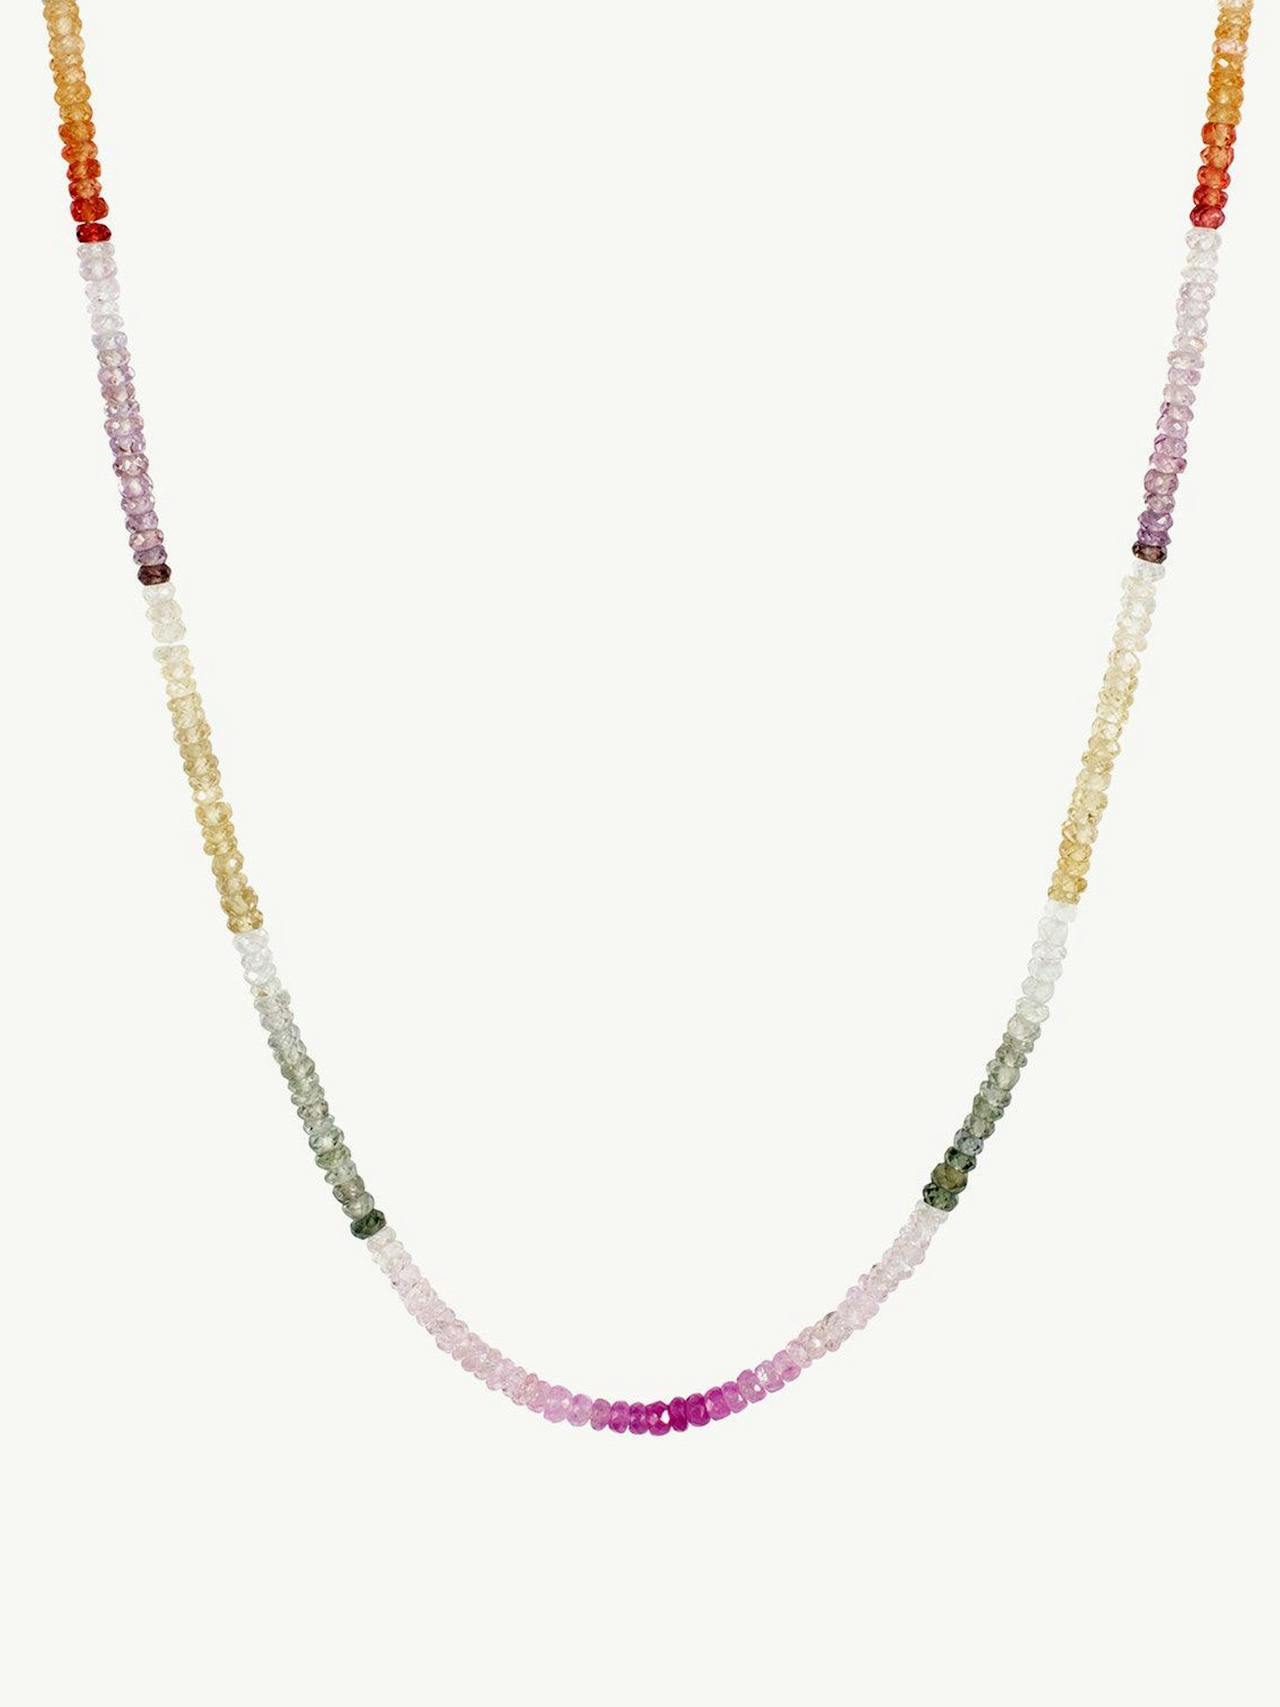 Graduated rainbow sapphire beaded necklace